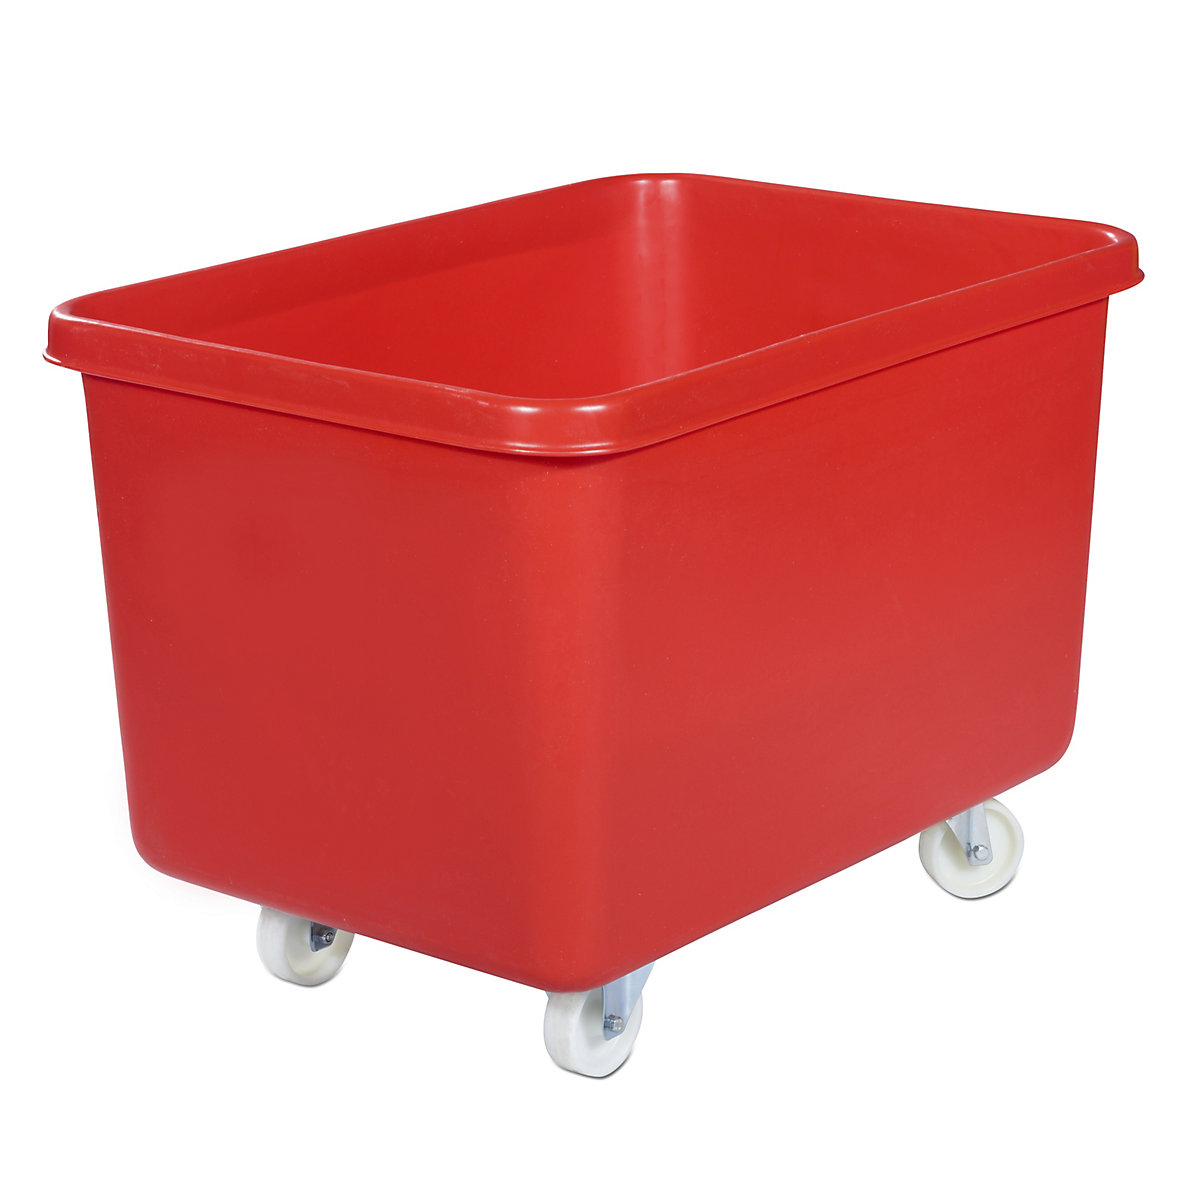 Rechteckbehälter aus Polyethylen, fahrbar, Inhalt 340 l, rot, ab 5 Stk-5